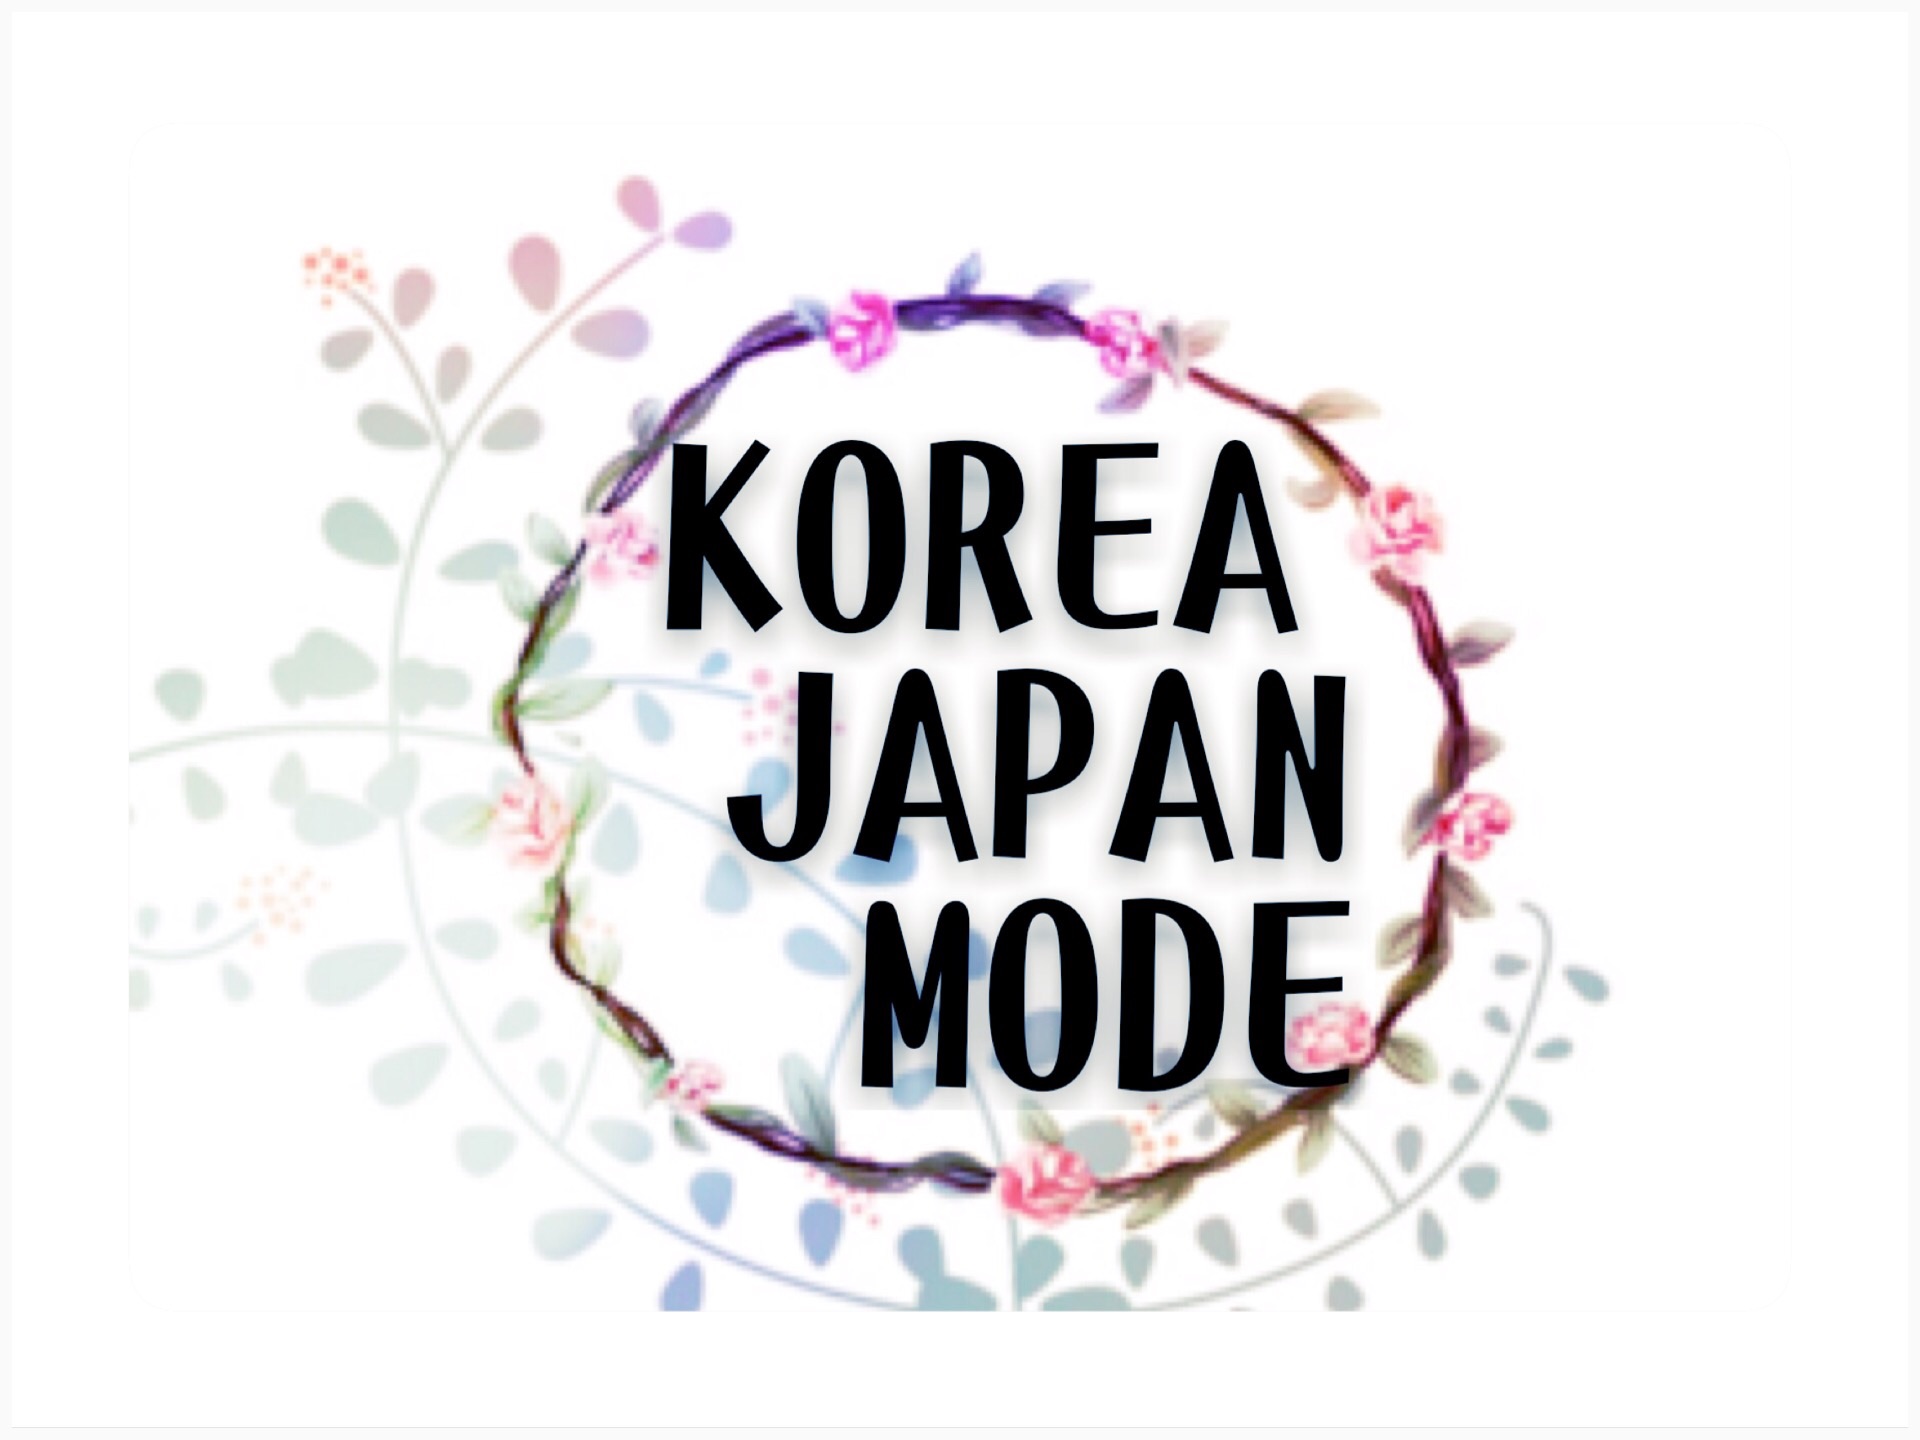 Korea Japan Mode